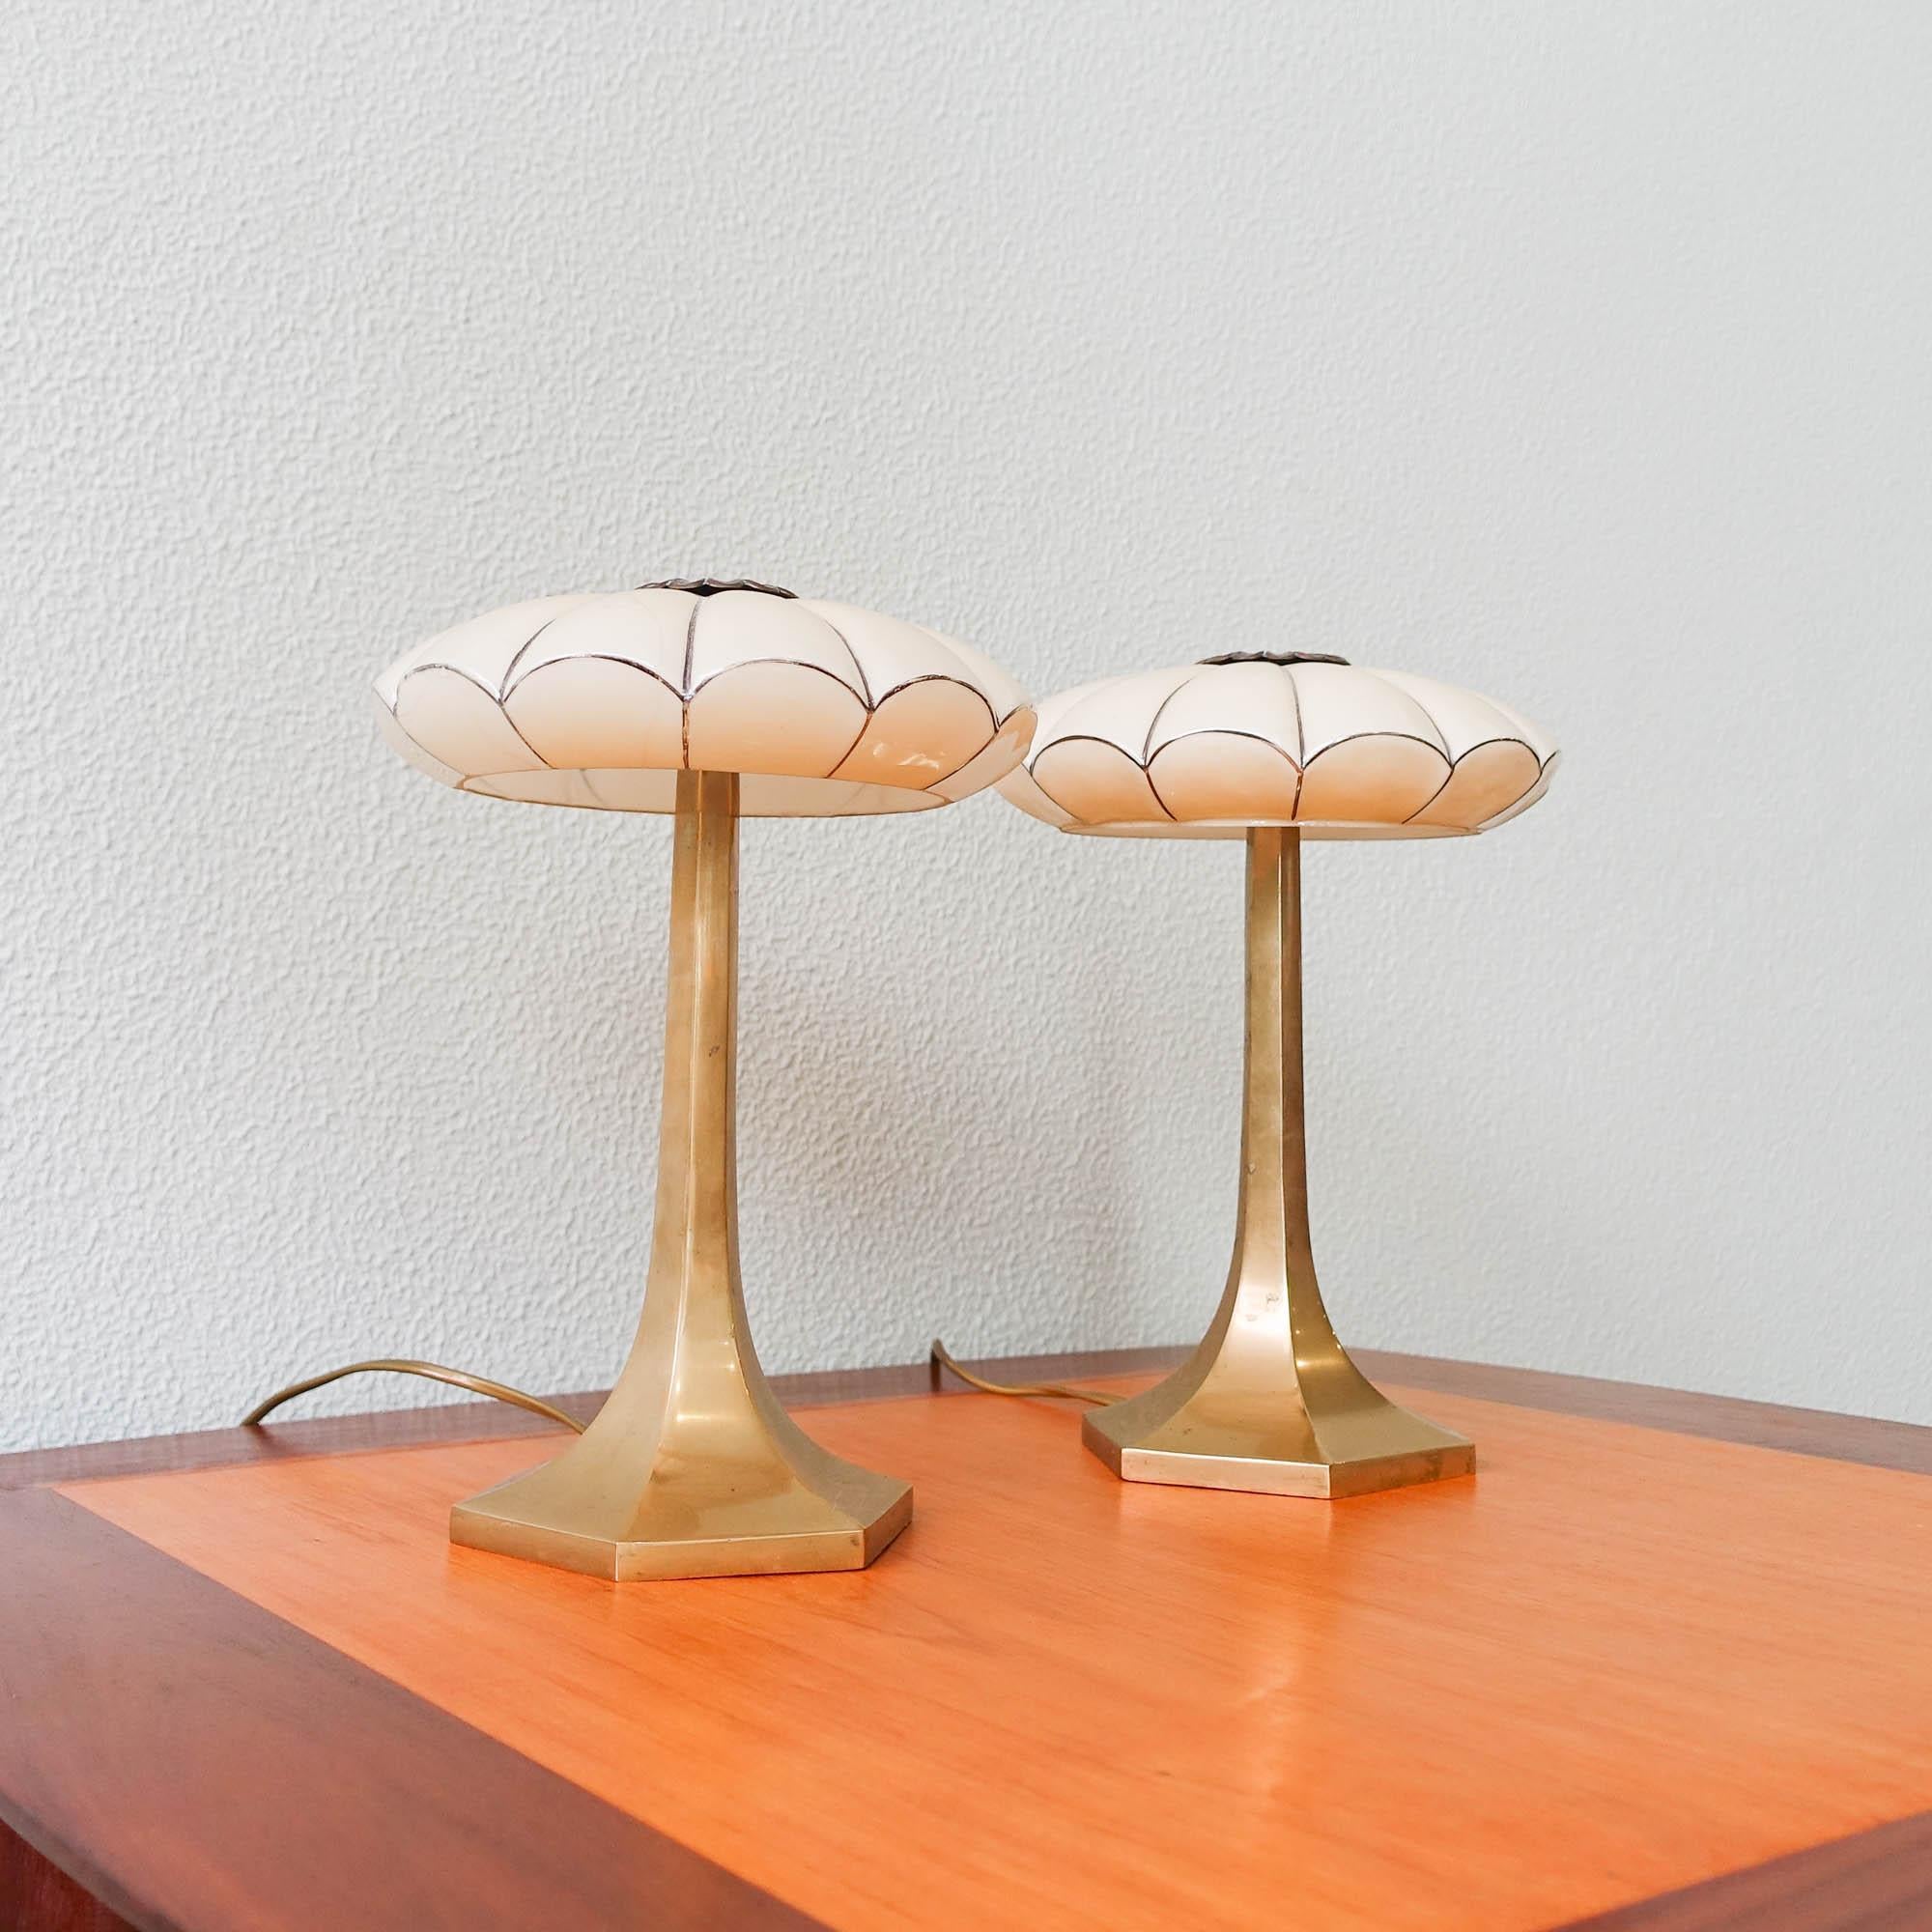 Mid-20th Century Pair of Art Deco Table Lamps from Josef Hoffman for Wiener Werkstatte, 1930's